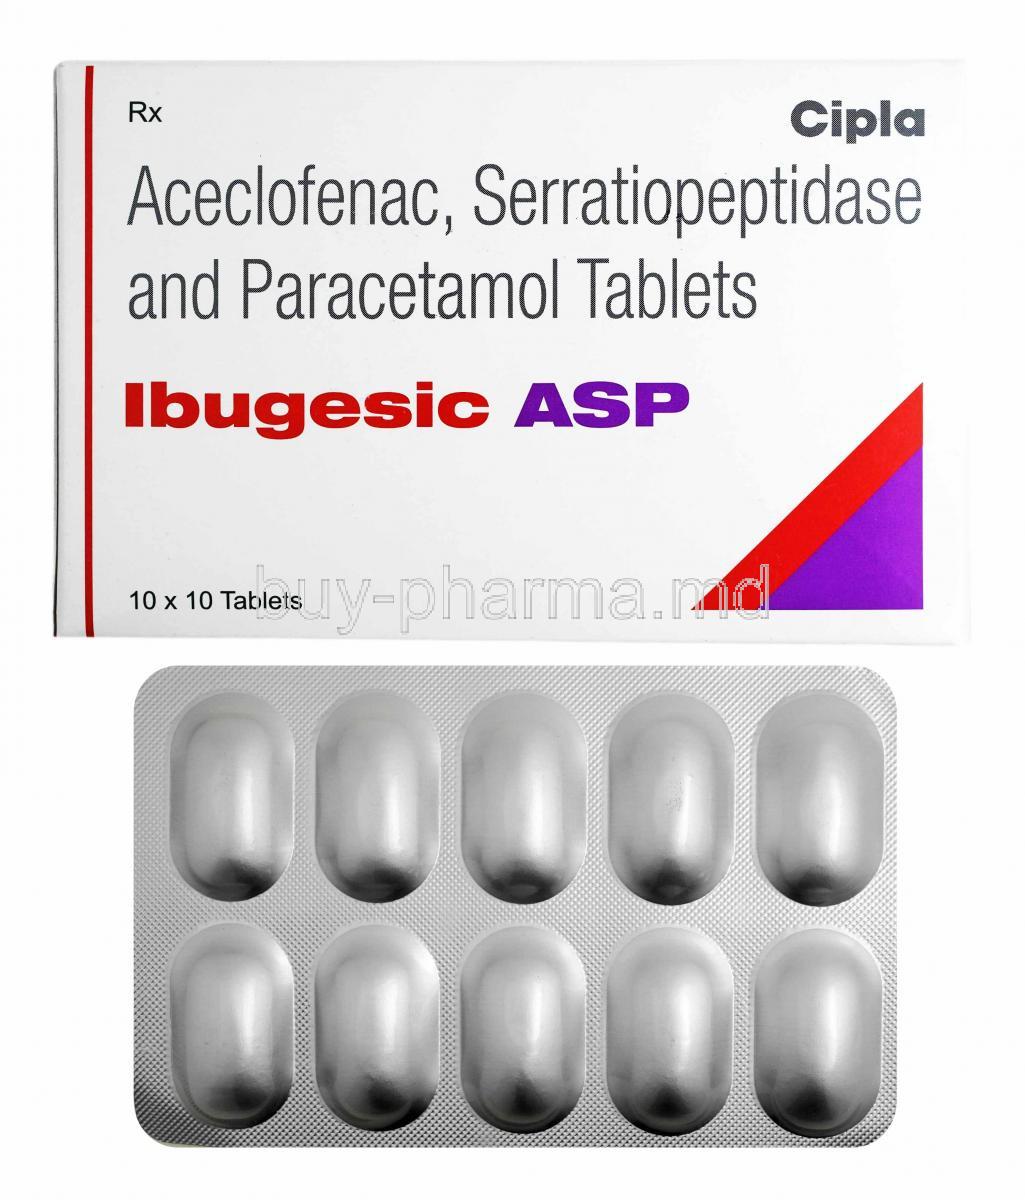 Ibugesic ASP, Aceclofenac, Paracetamol and Serratiopeptidase box and tablets